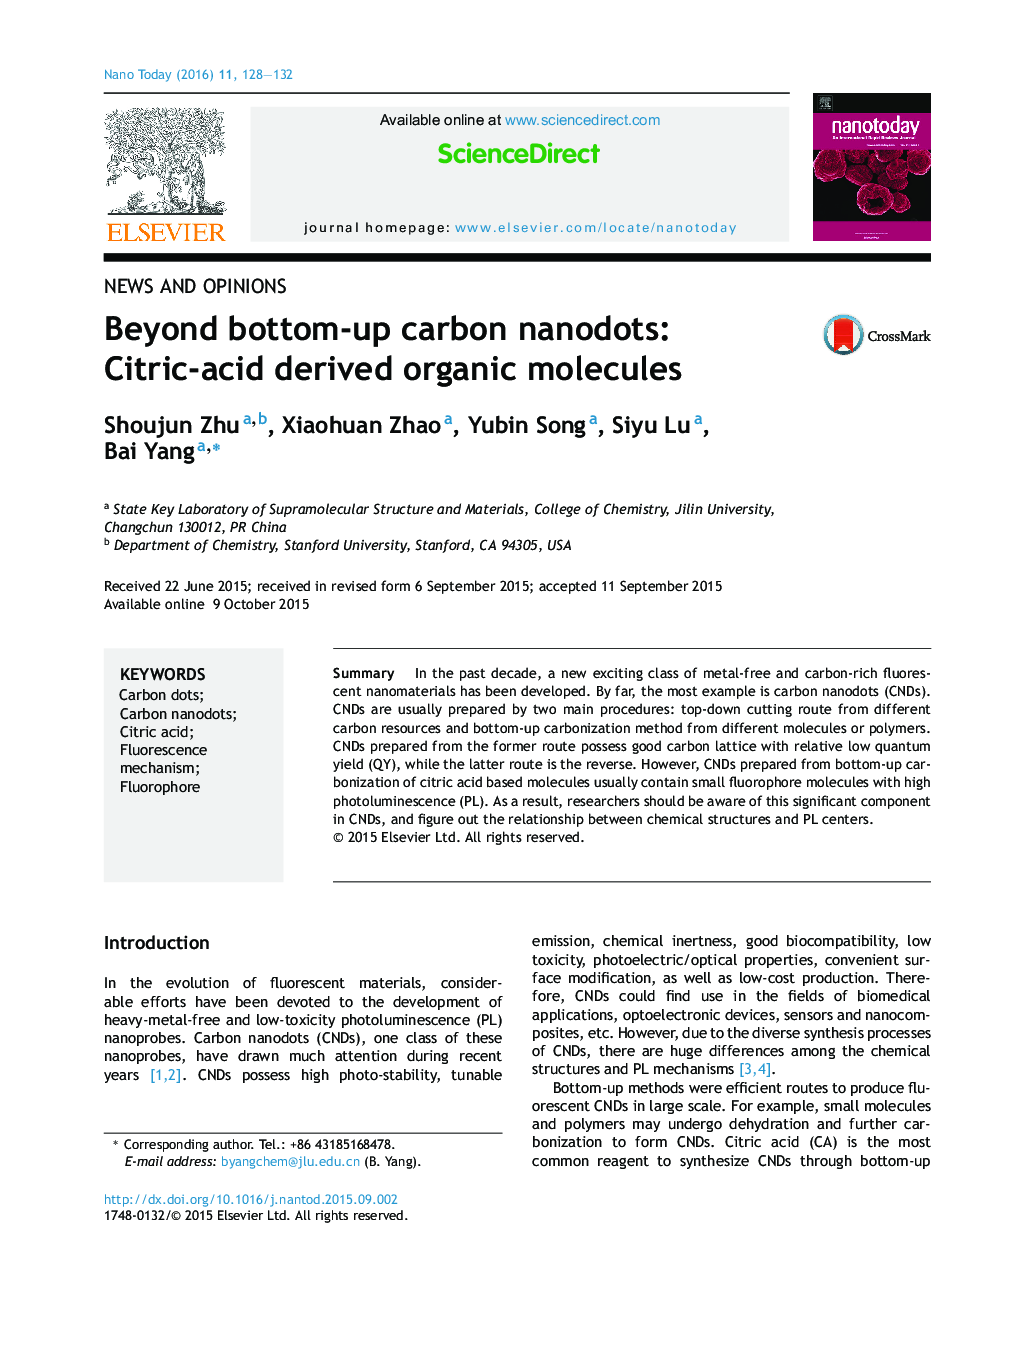 Beyond bottom-up carbon nanodots: Citric-acid derived organic molecules